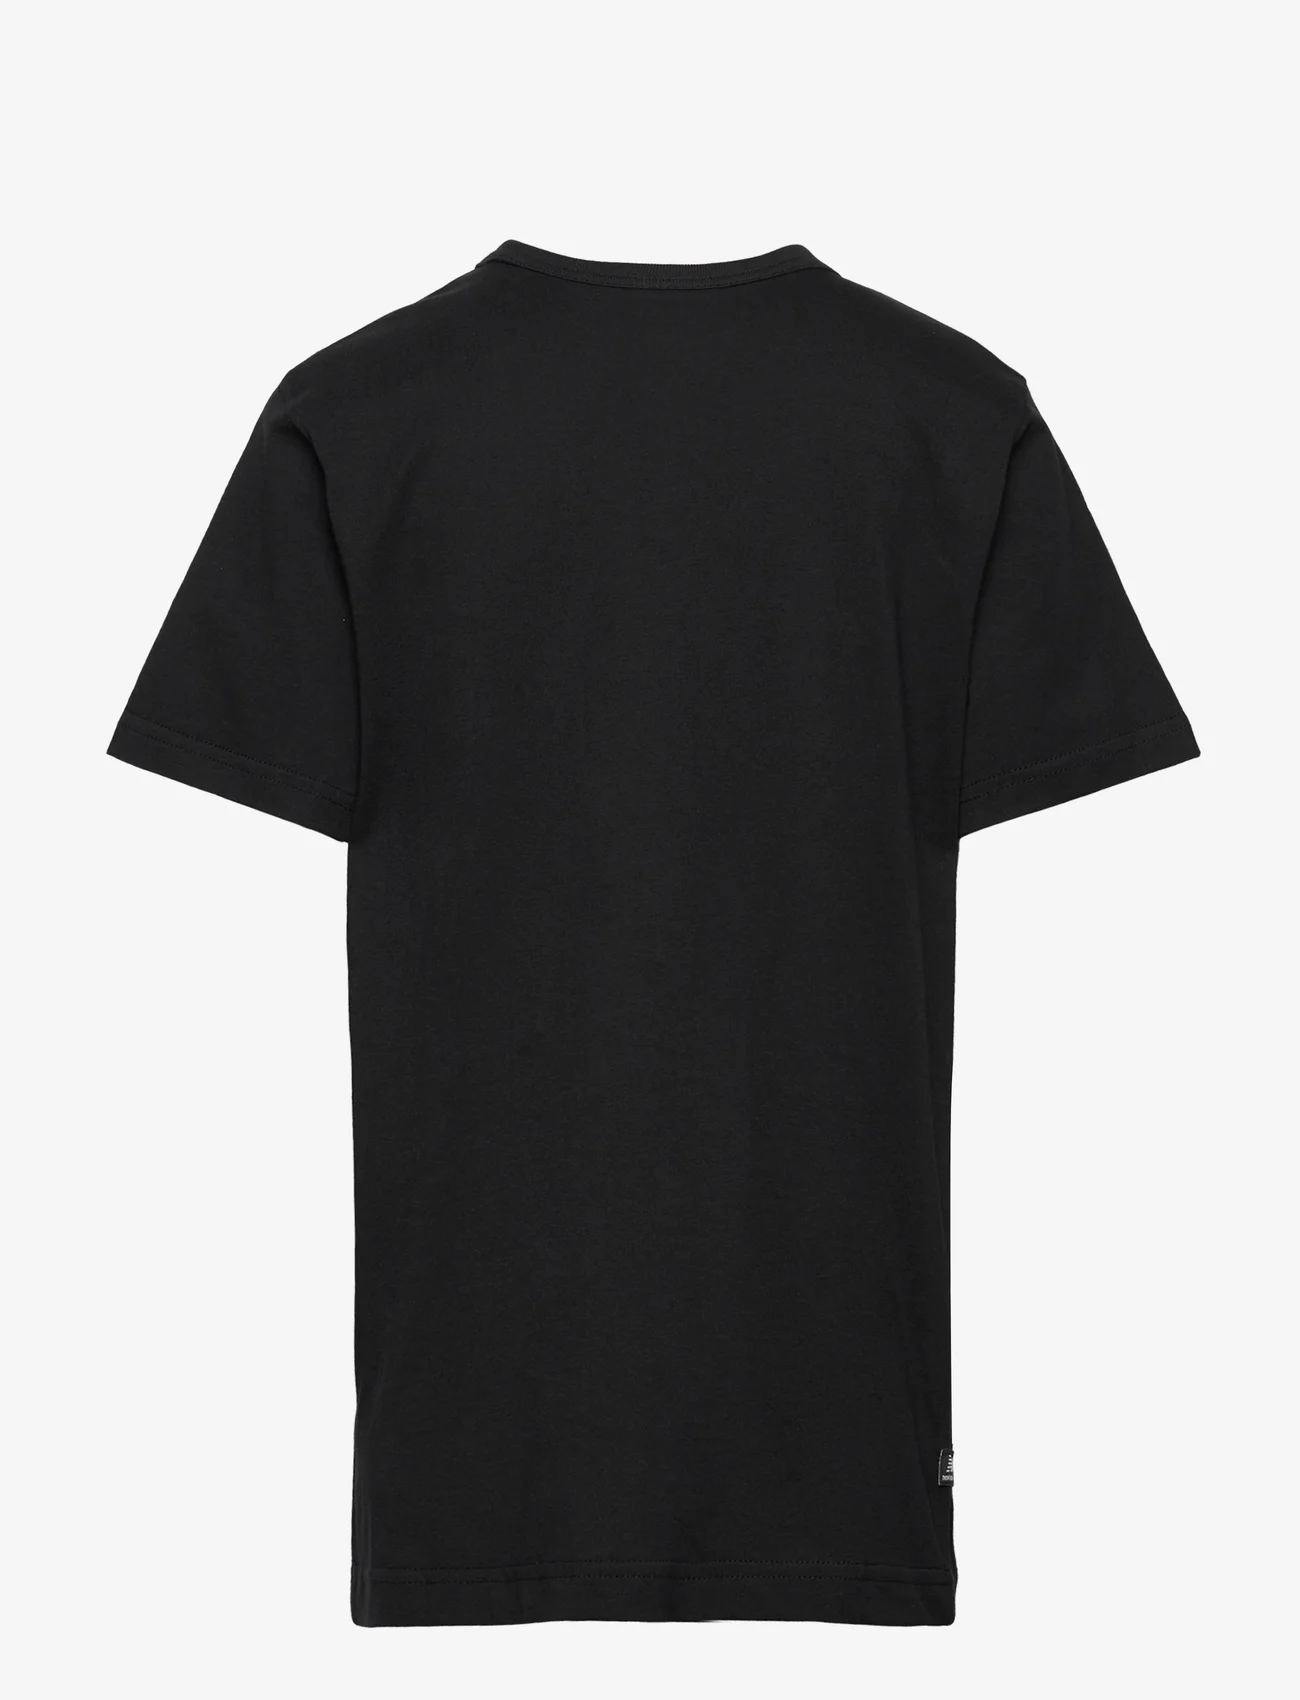 New Balance - Essentials Reimagined Graphic Cotton Jersey Short Sleeve T-shirt - short-sleeved t-shirts - black - 1